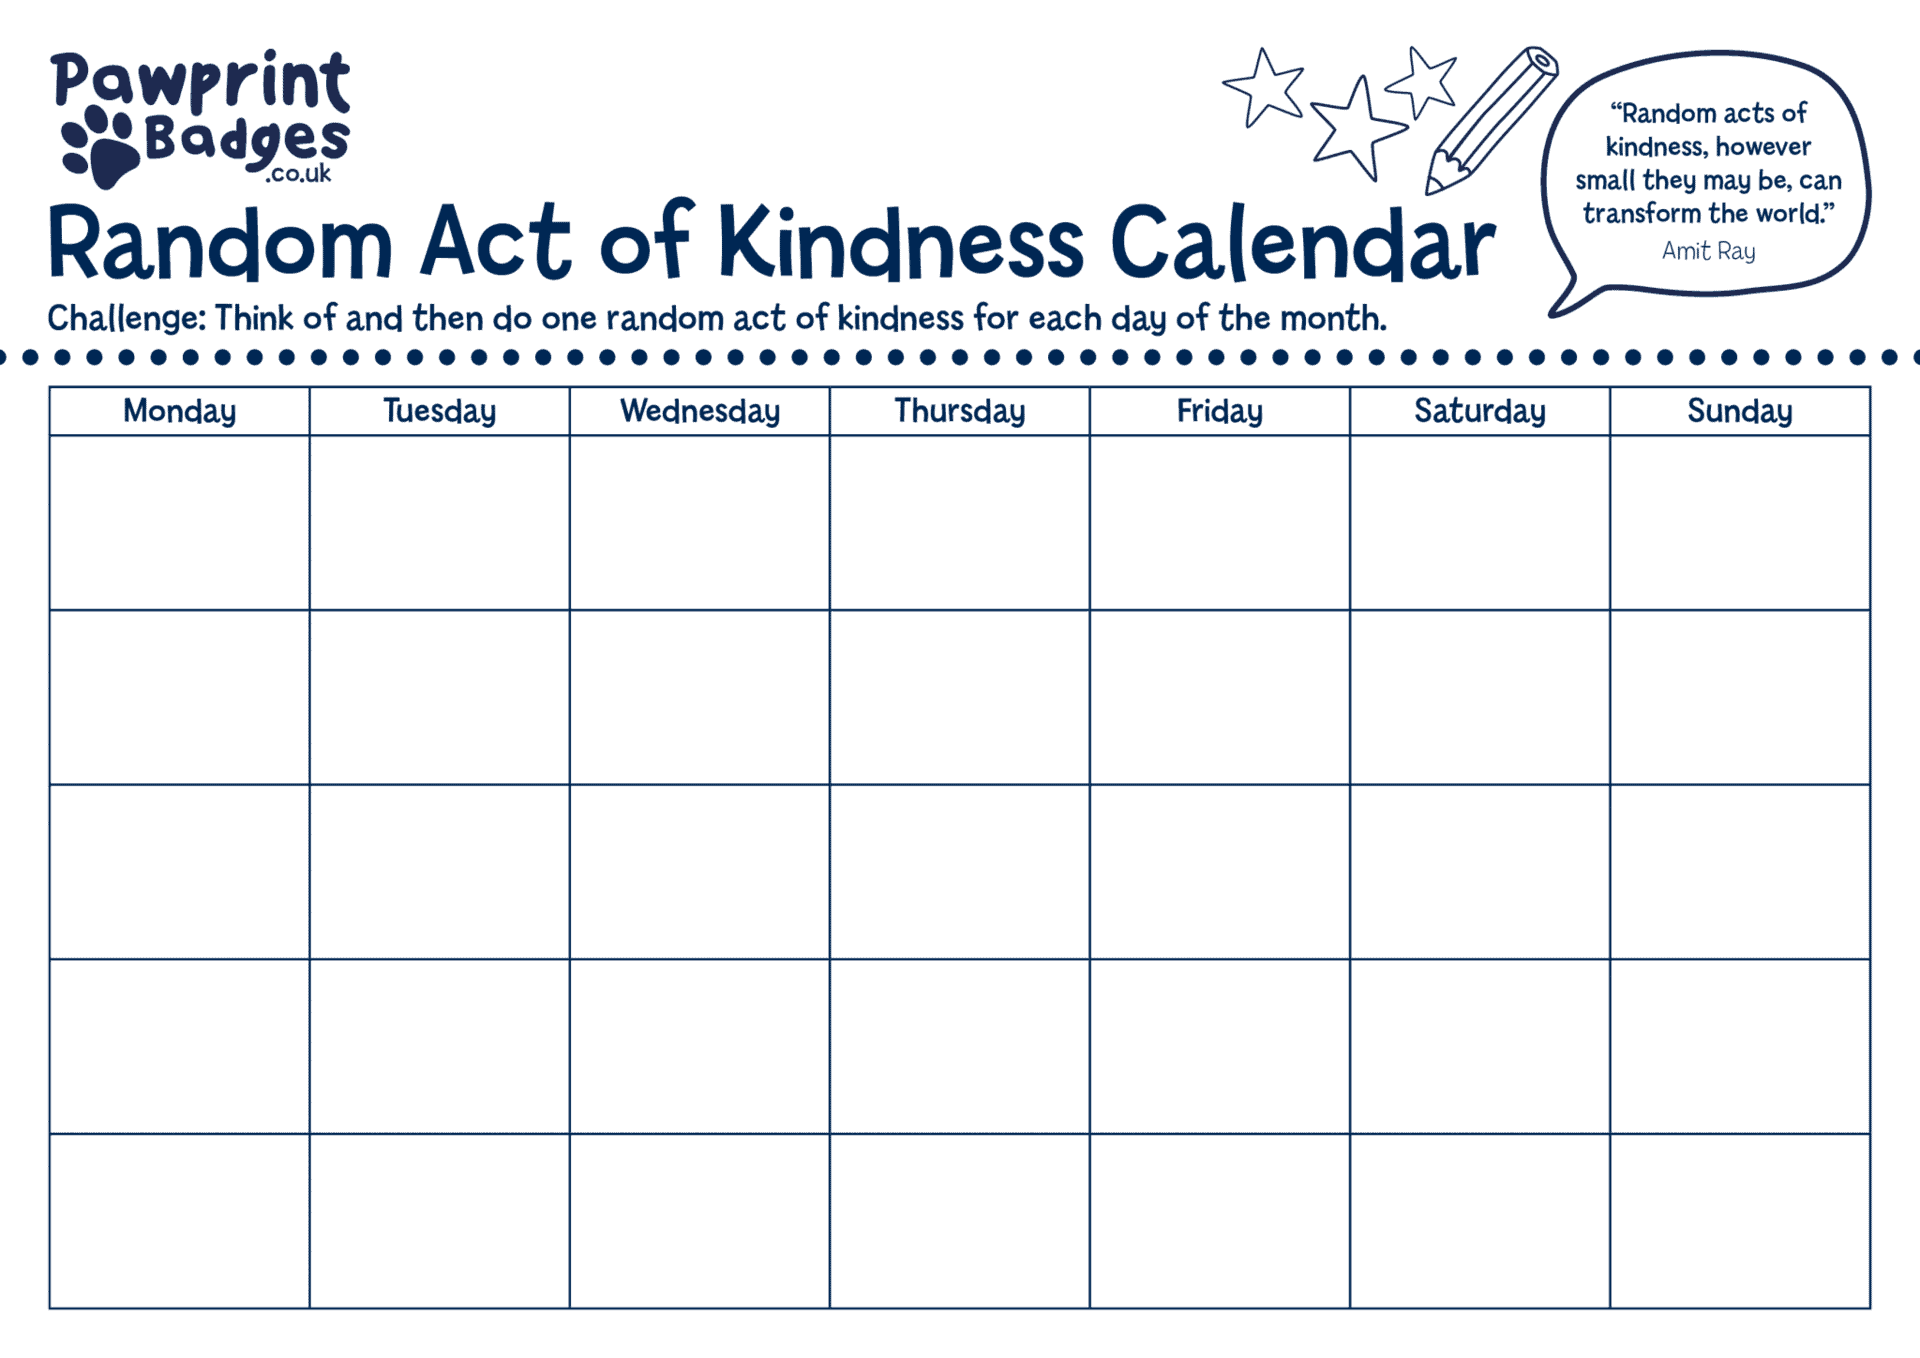 Random Acts of Kindness Calendar | Pawprint Family